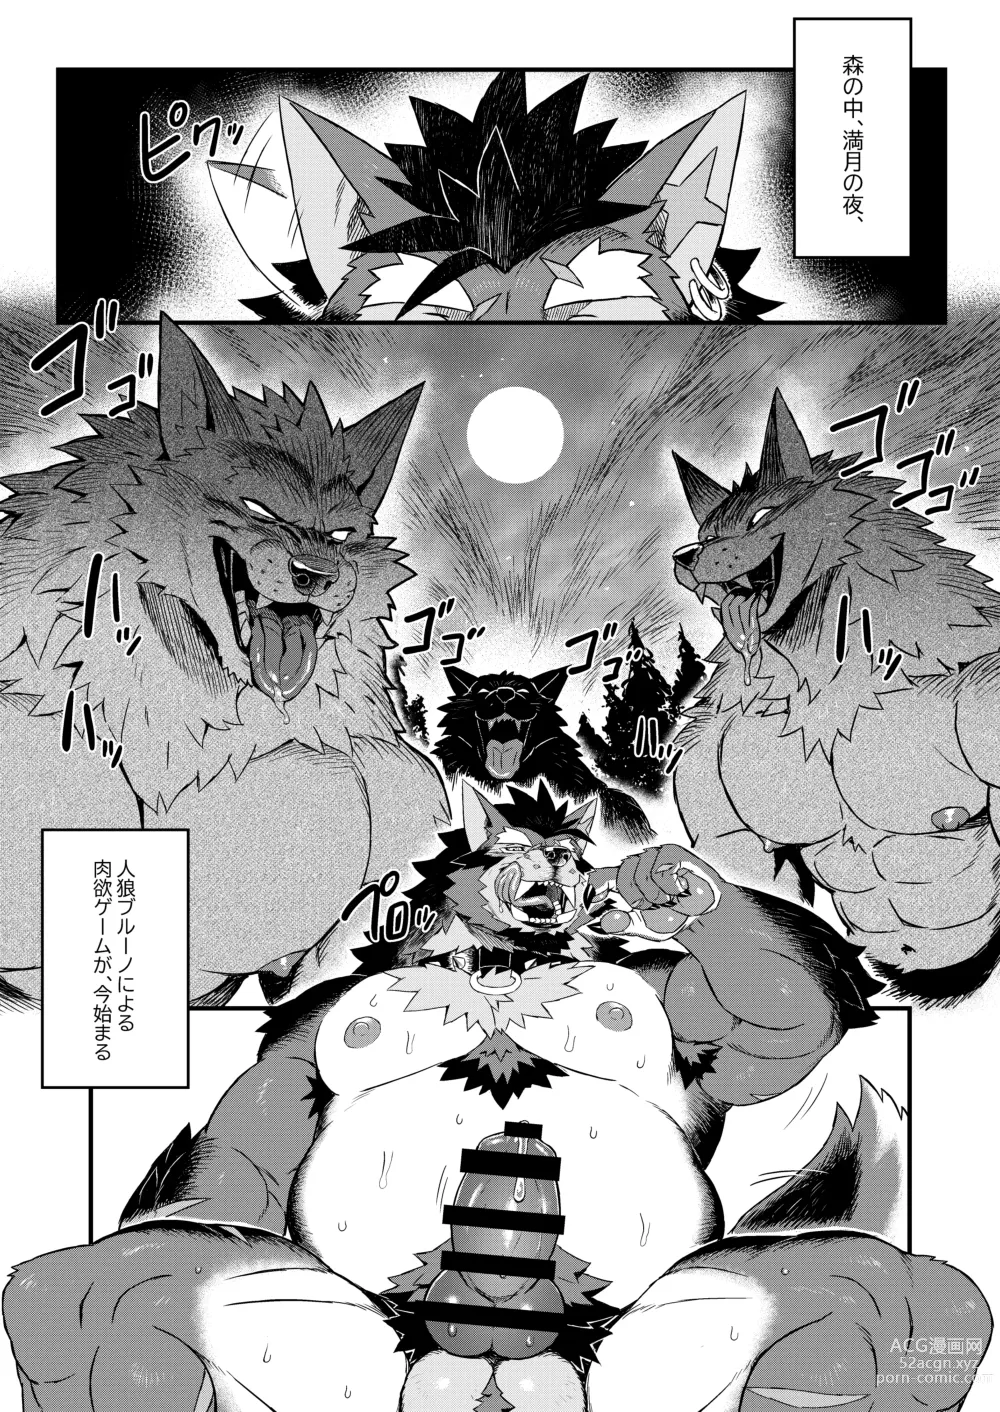 Page 4 of manga GAOGAOGAOOO!!